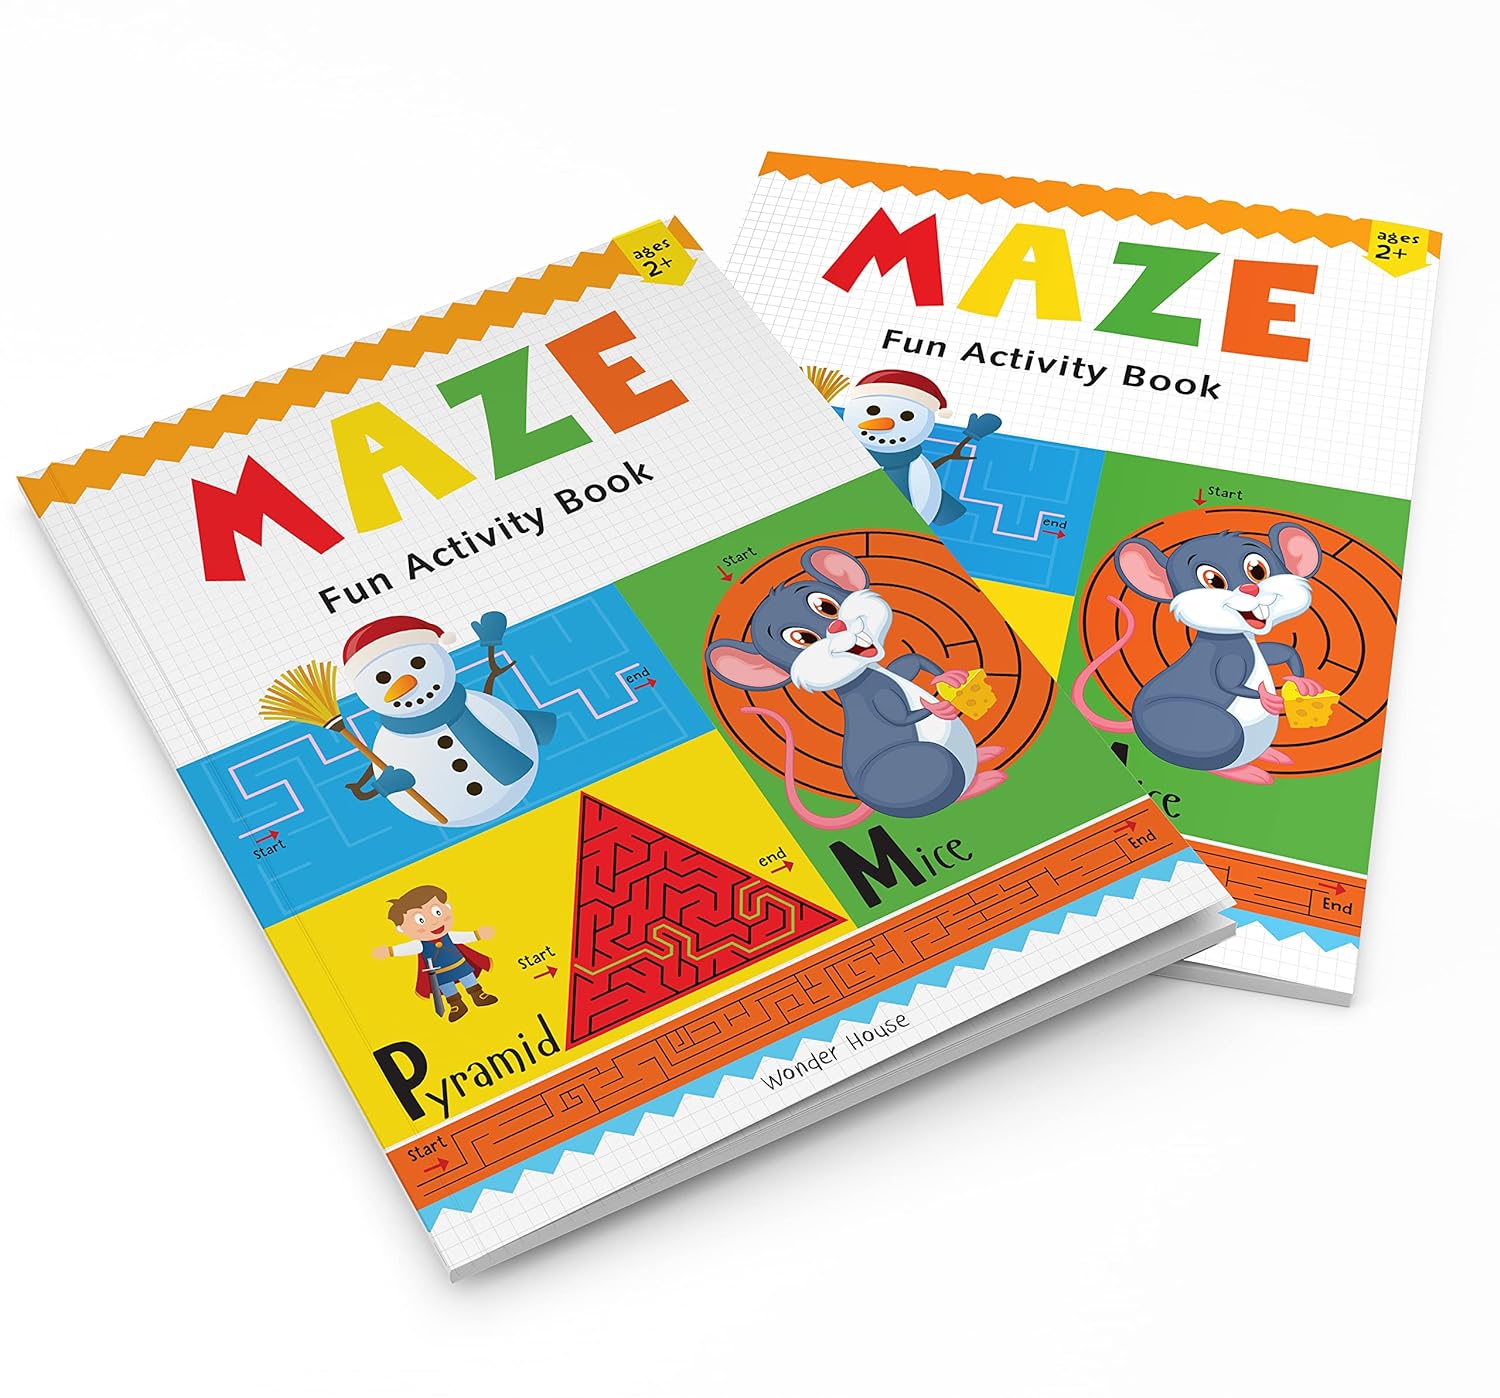 Maze - Fun Activity Book For Age 2+